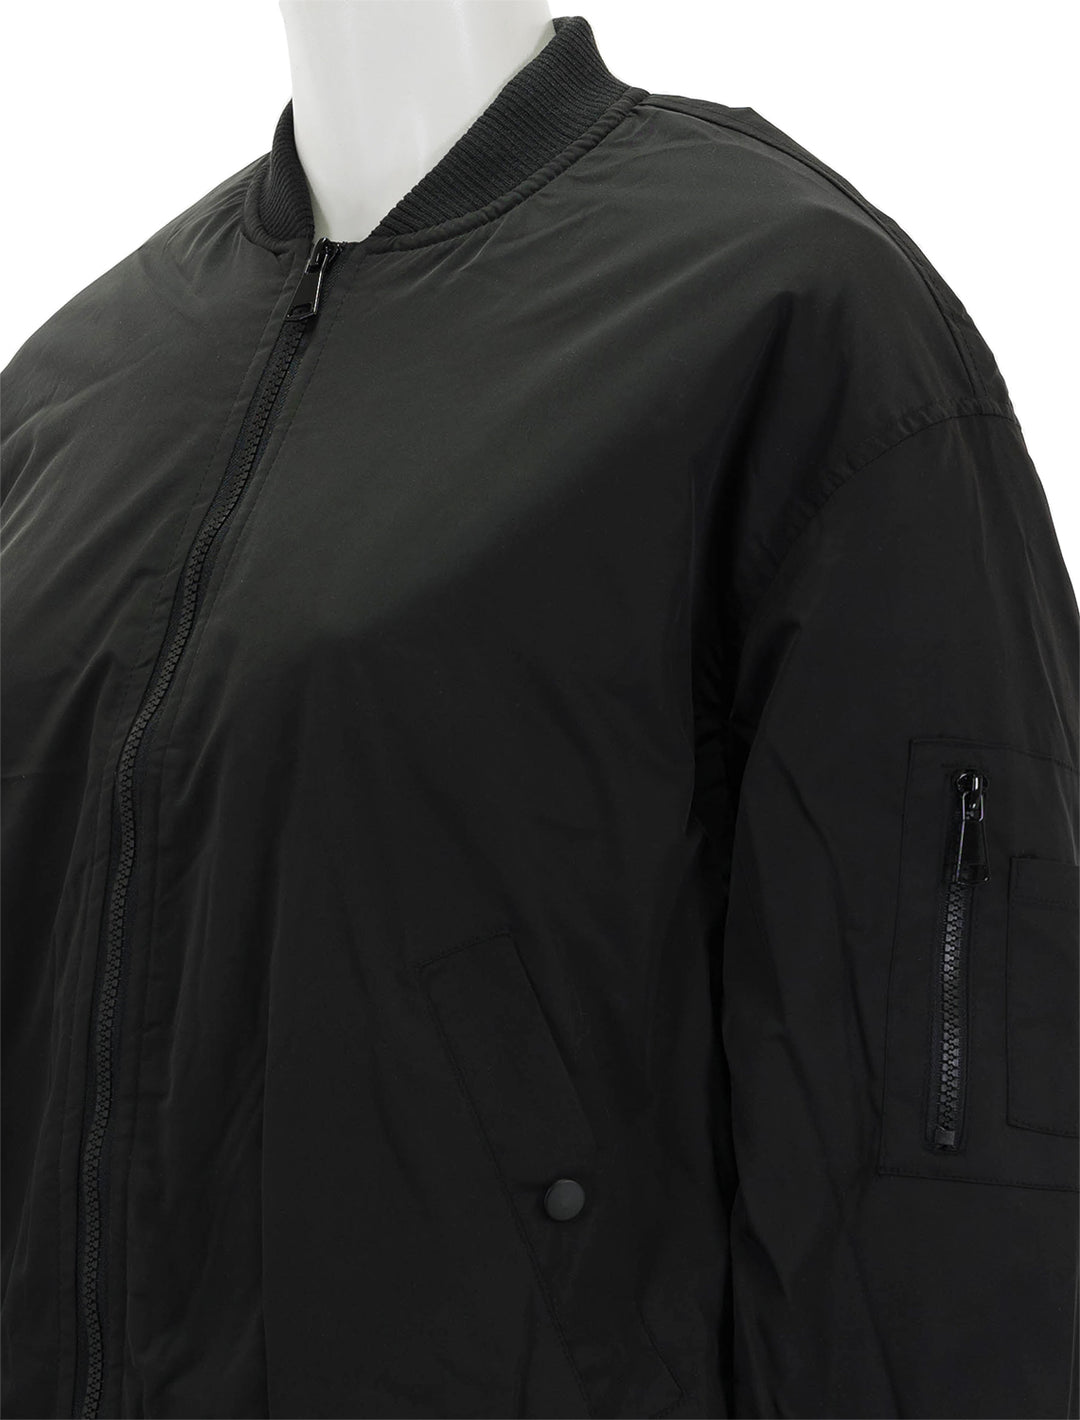 Close-up view of Steve Madden's vida jacket in black.